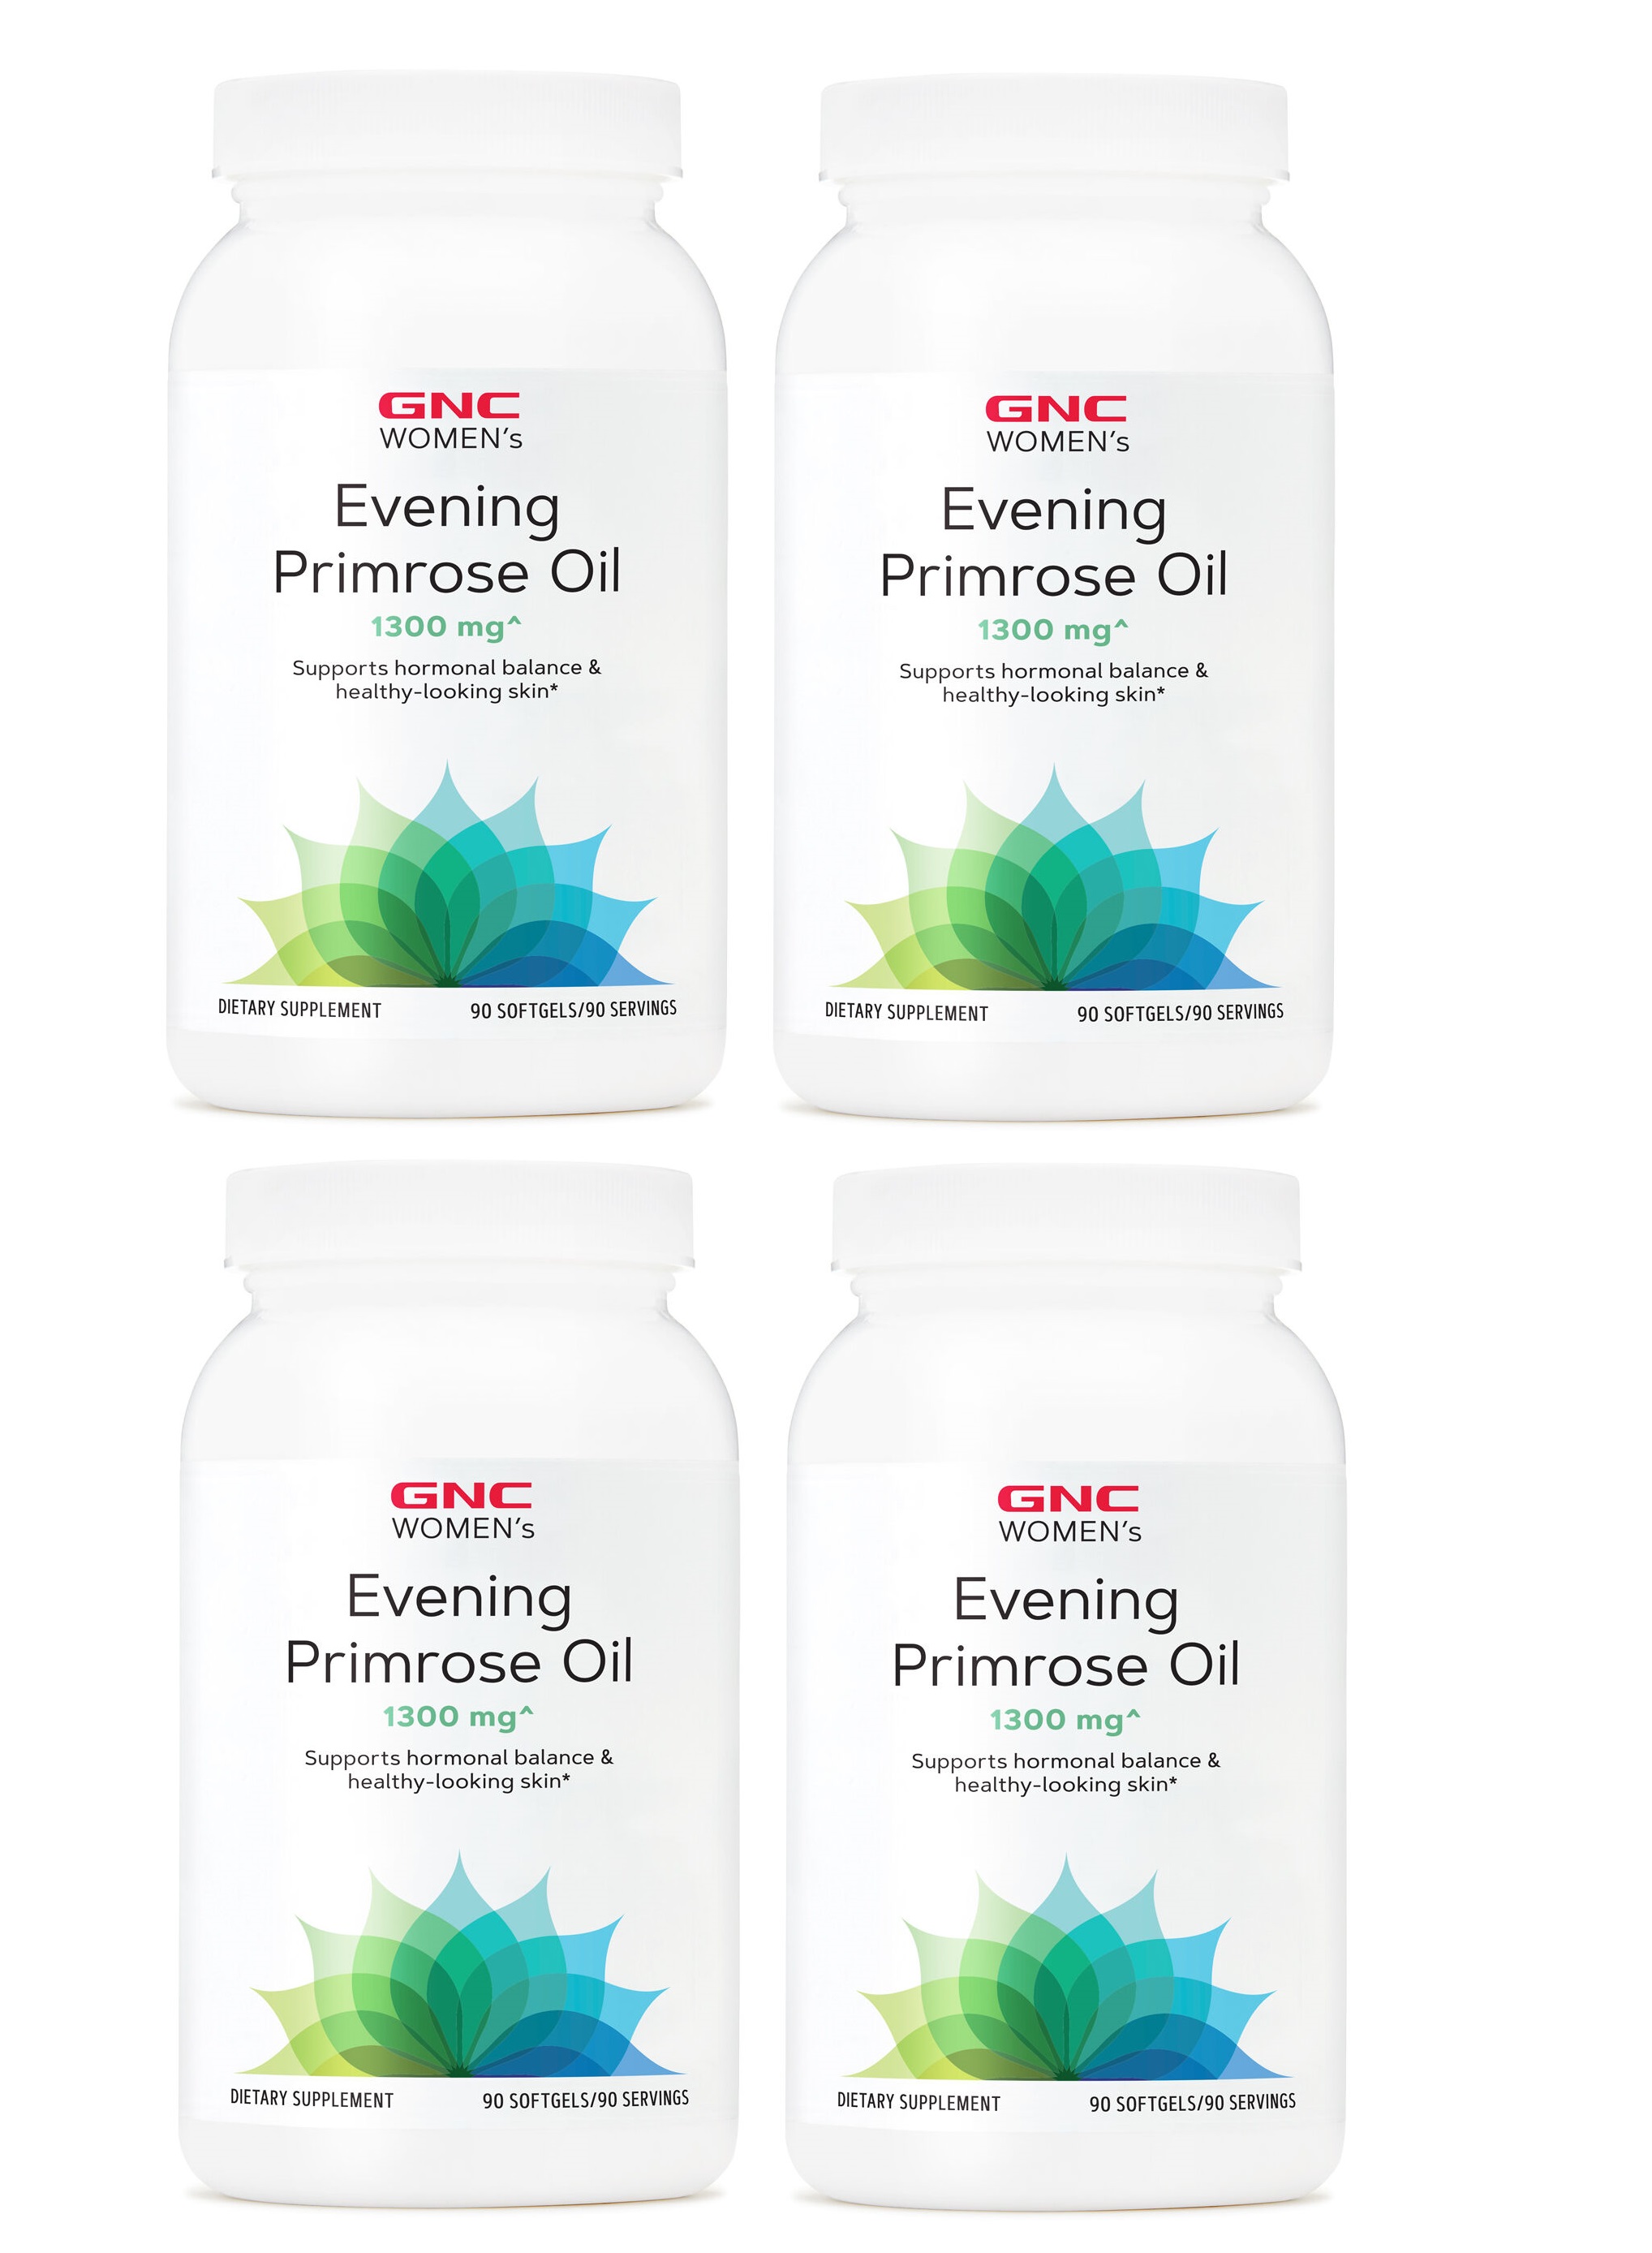 GNC Women's Evening Primrose Oil 1300, Softgel Capsules 90 gel 4